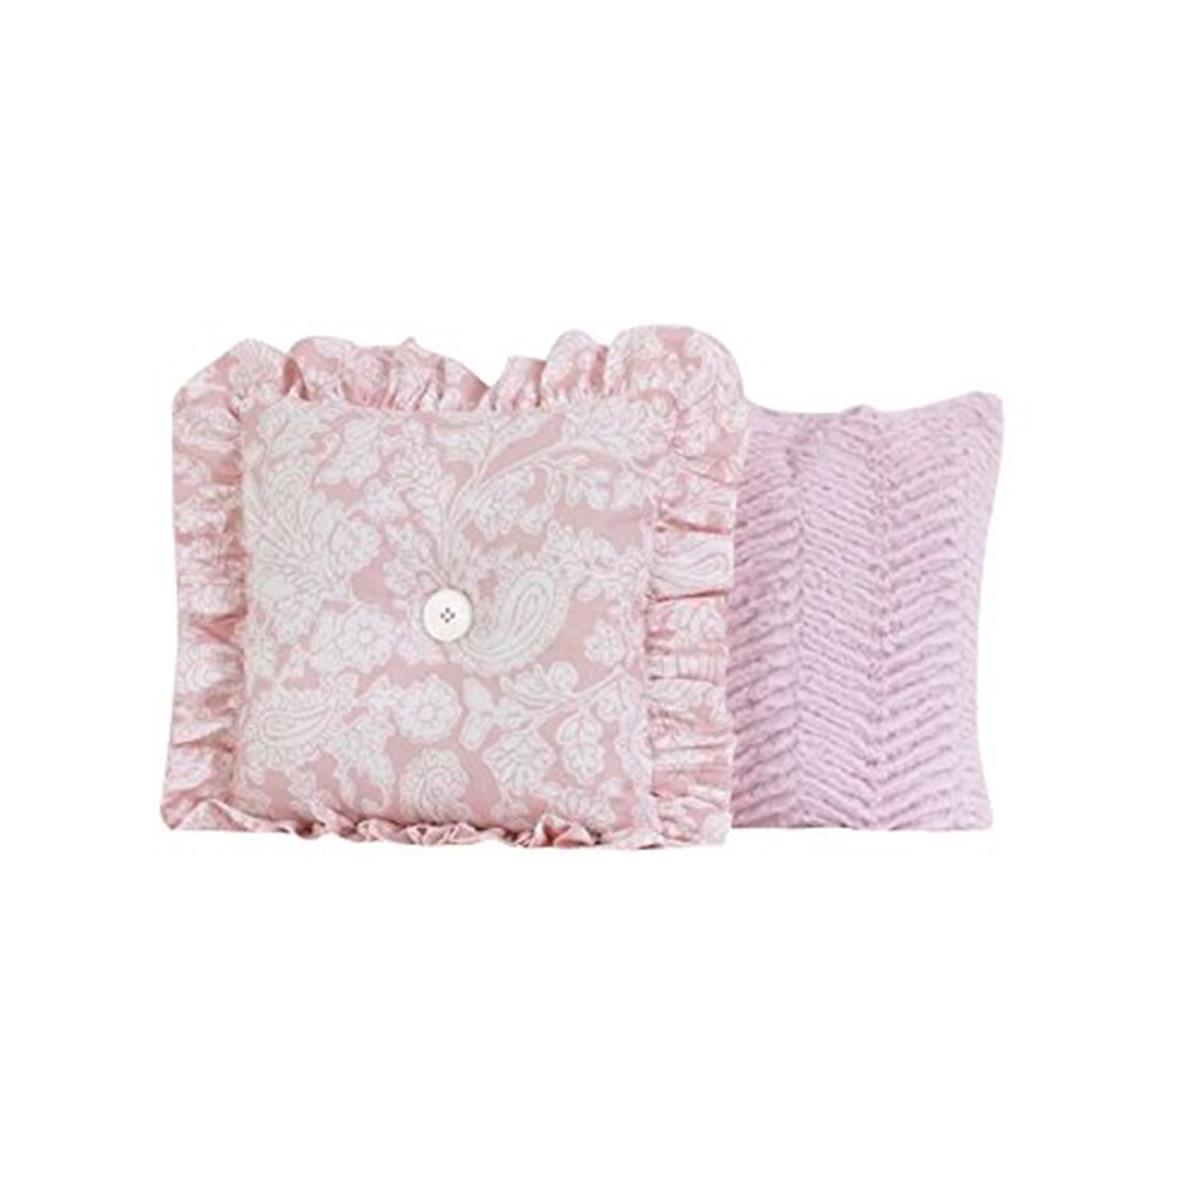 Danica Dba Cotton Tale Swpp Sweet & Simple Pink Pillow Pack